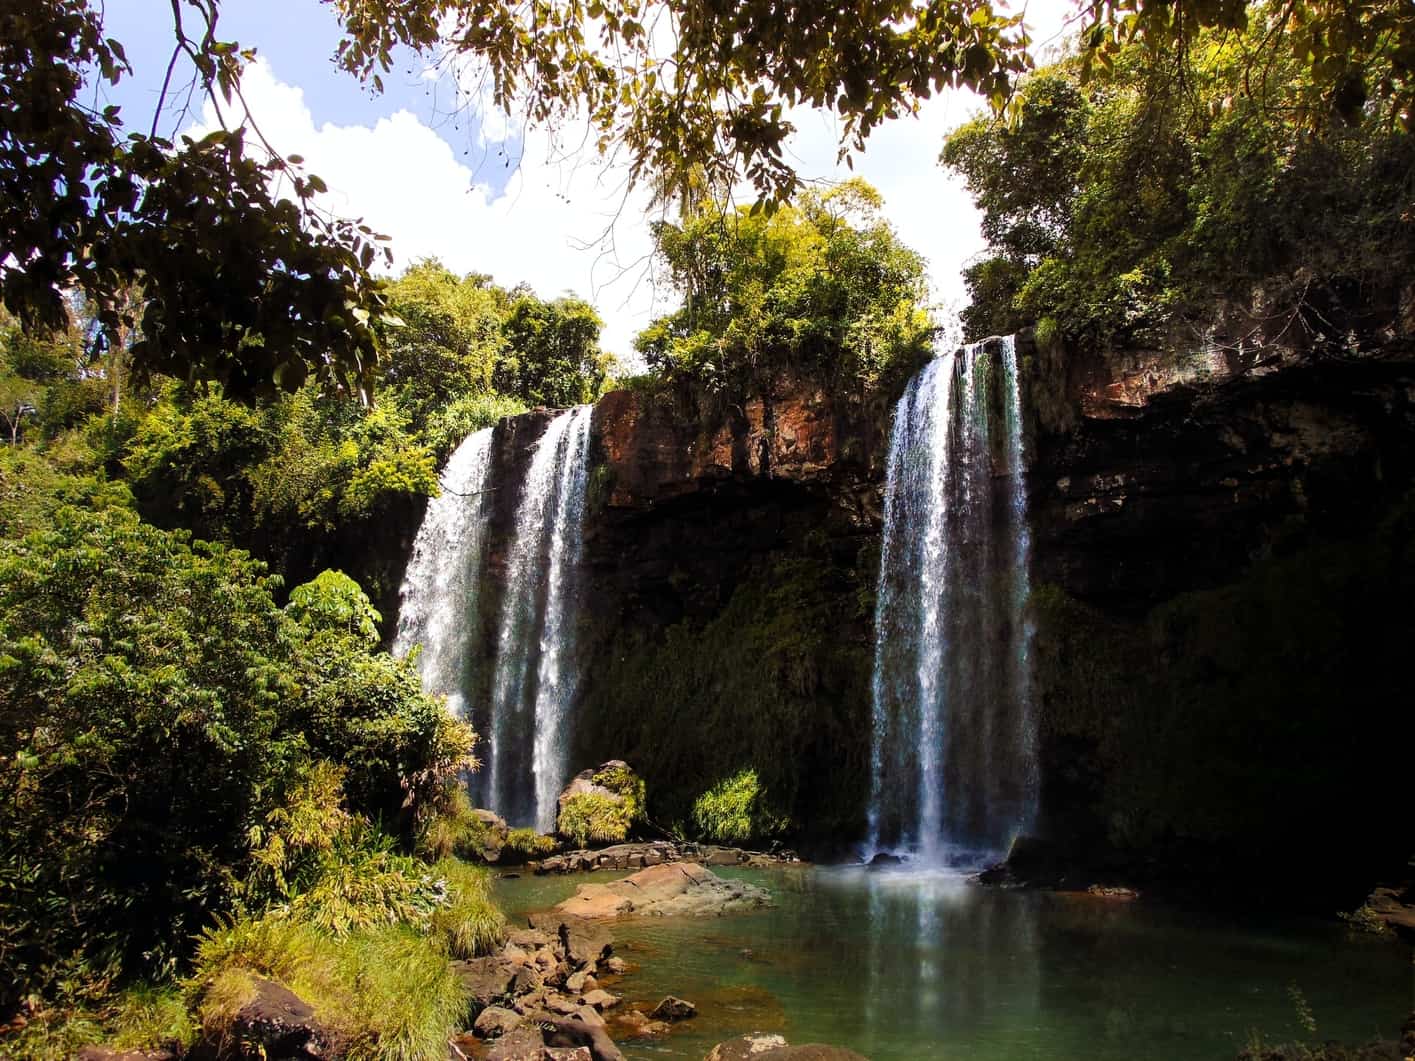 Iguazu Falls, is Argentina open for tourism